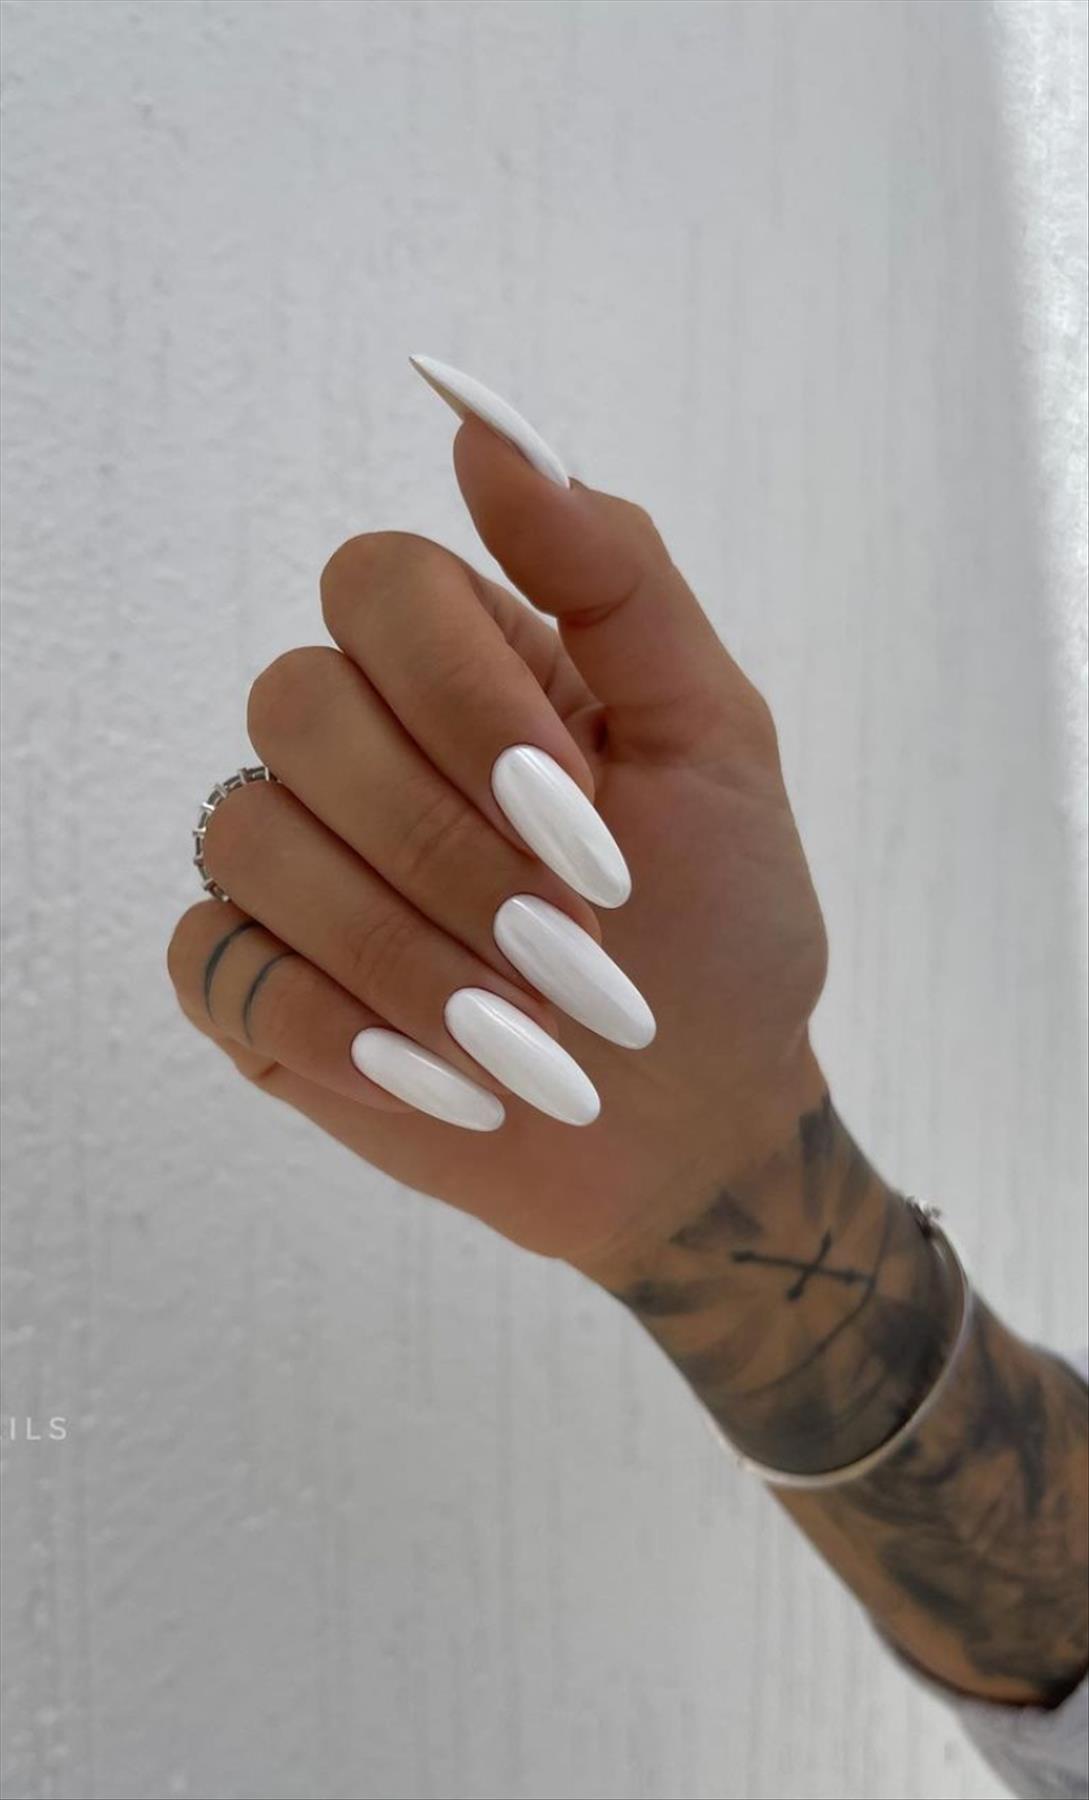 30 Elegant White Nails Design Perfect For Your Next Mani!